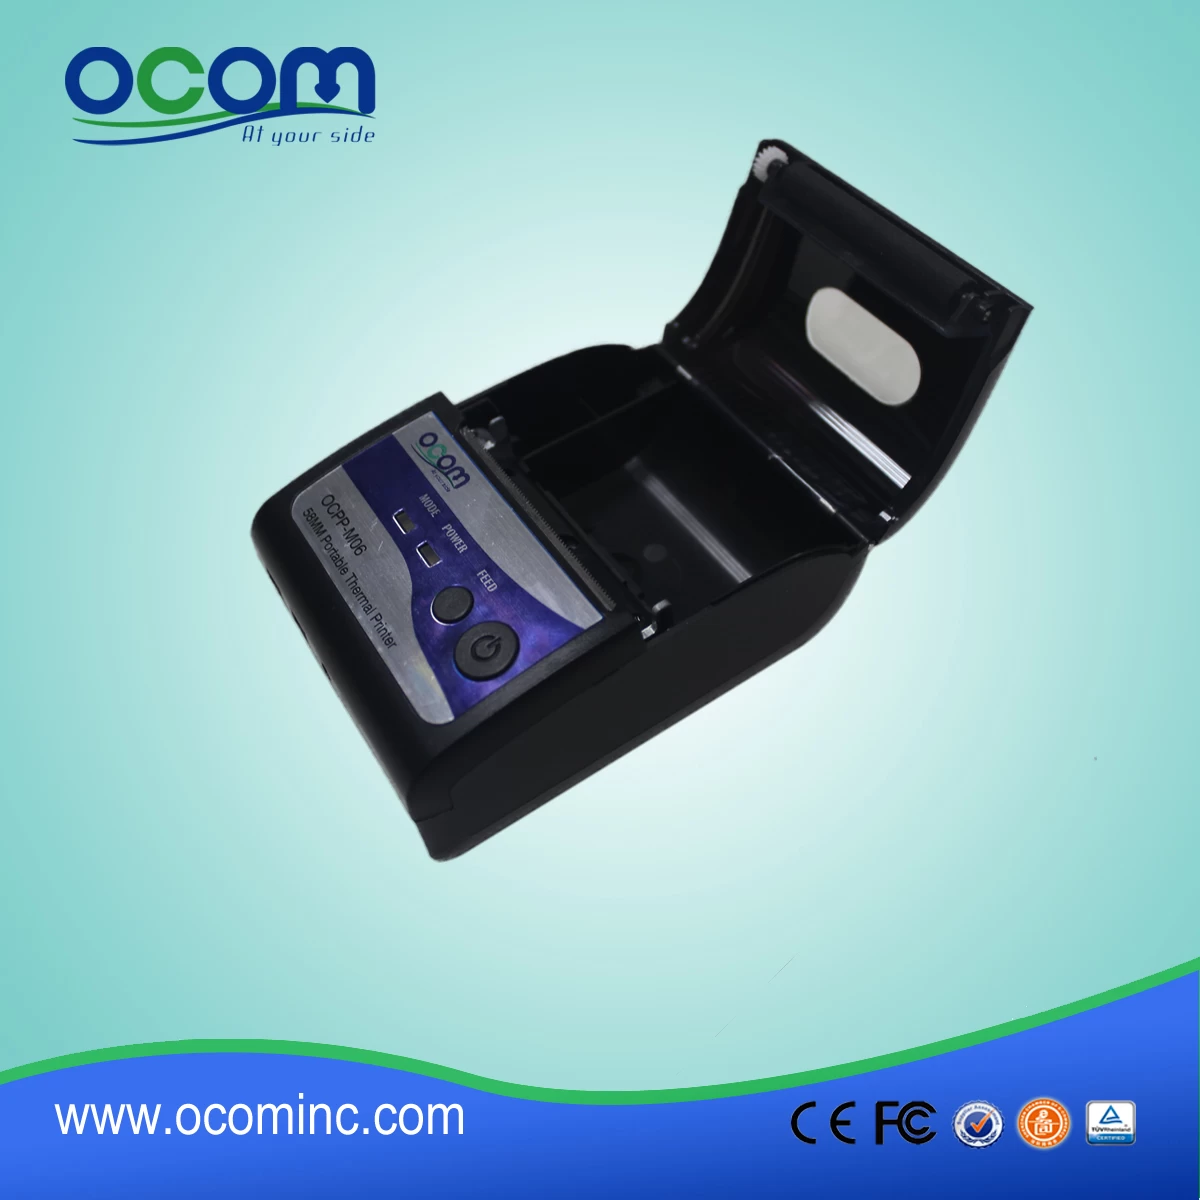 (OCPP-M06) OCOM Hot selling android bluetooth thermal printer